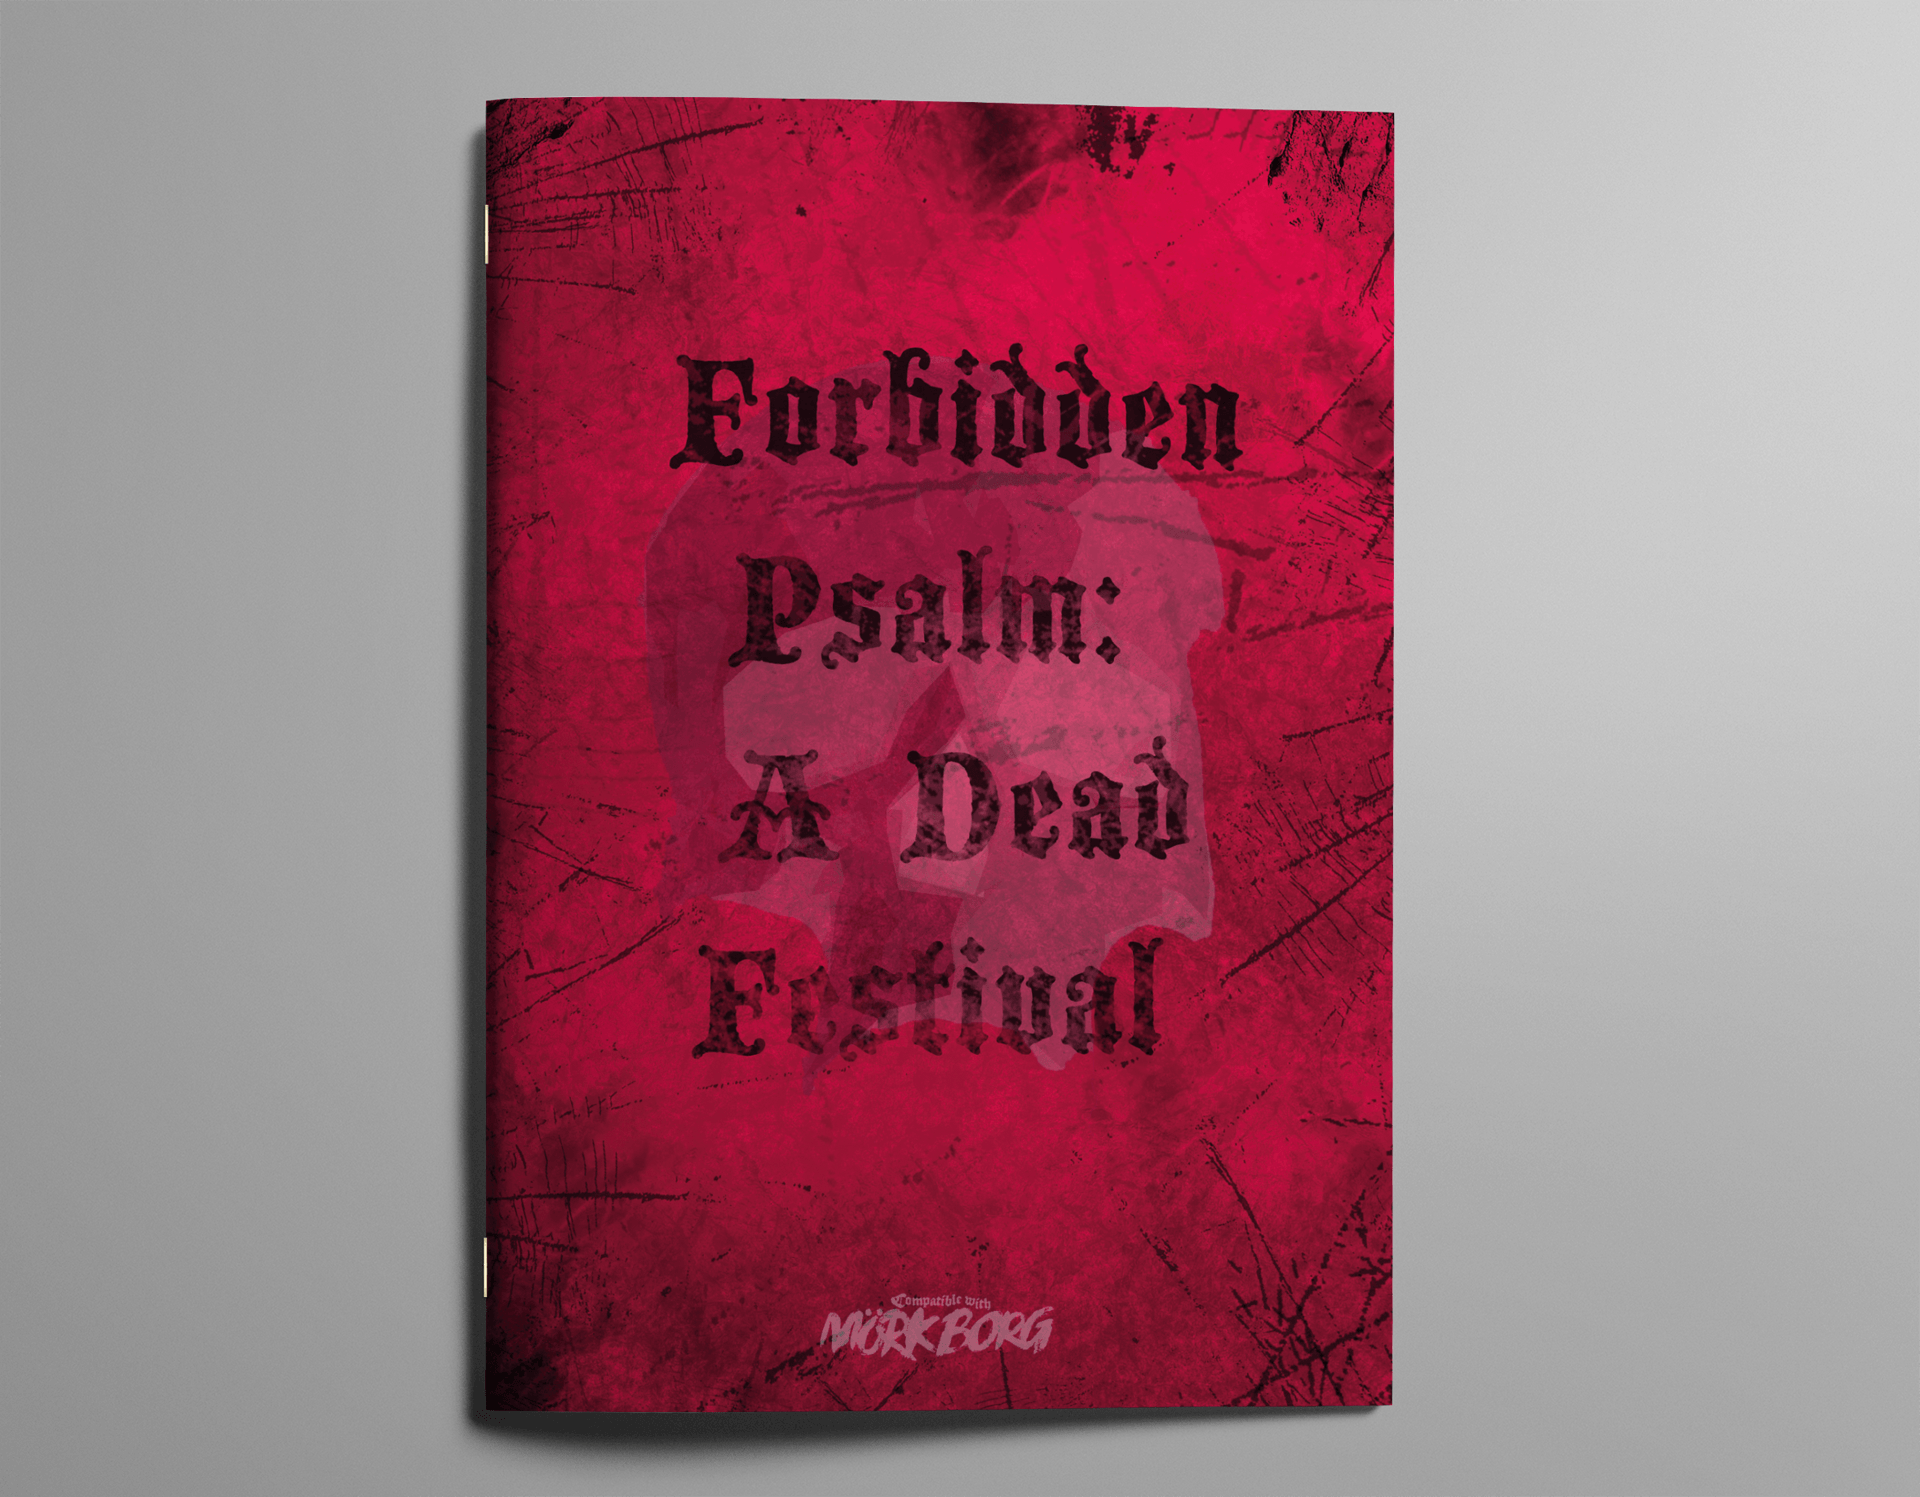 Forbidden Psalm: A Dead Festival + PDF